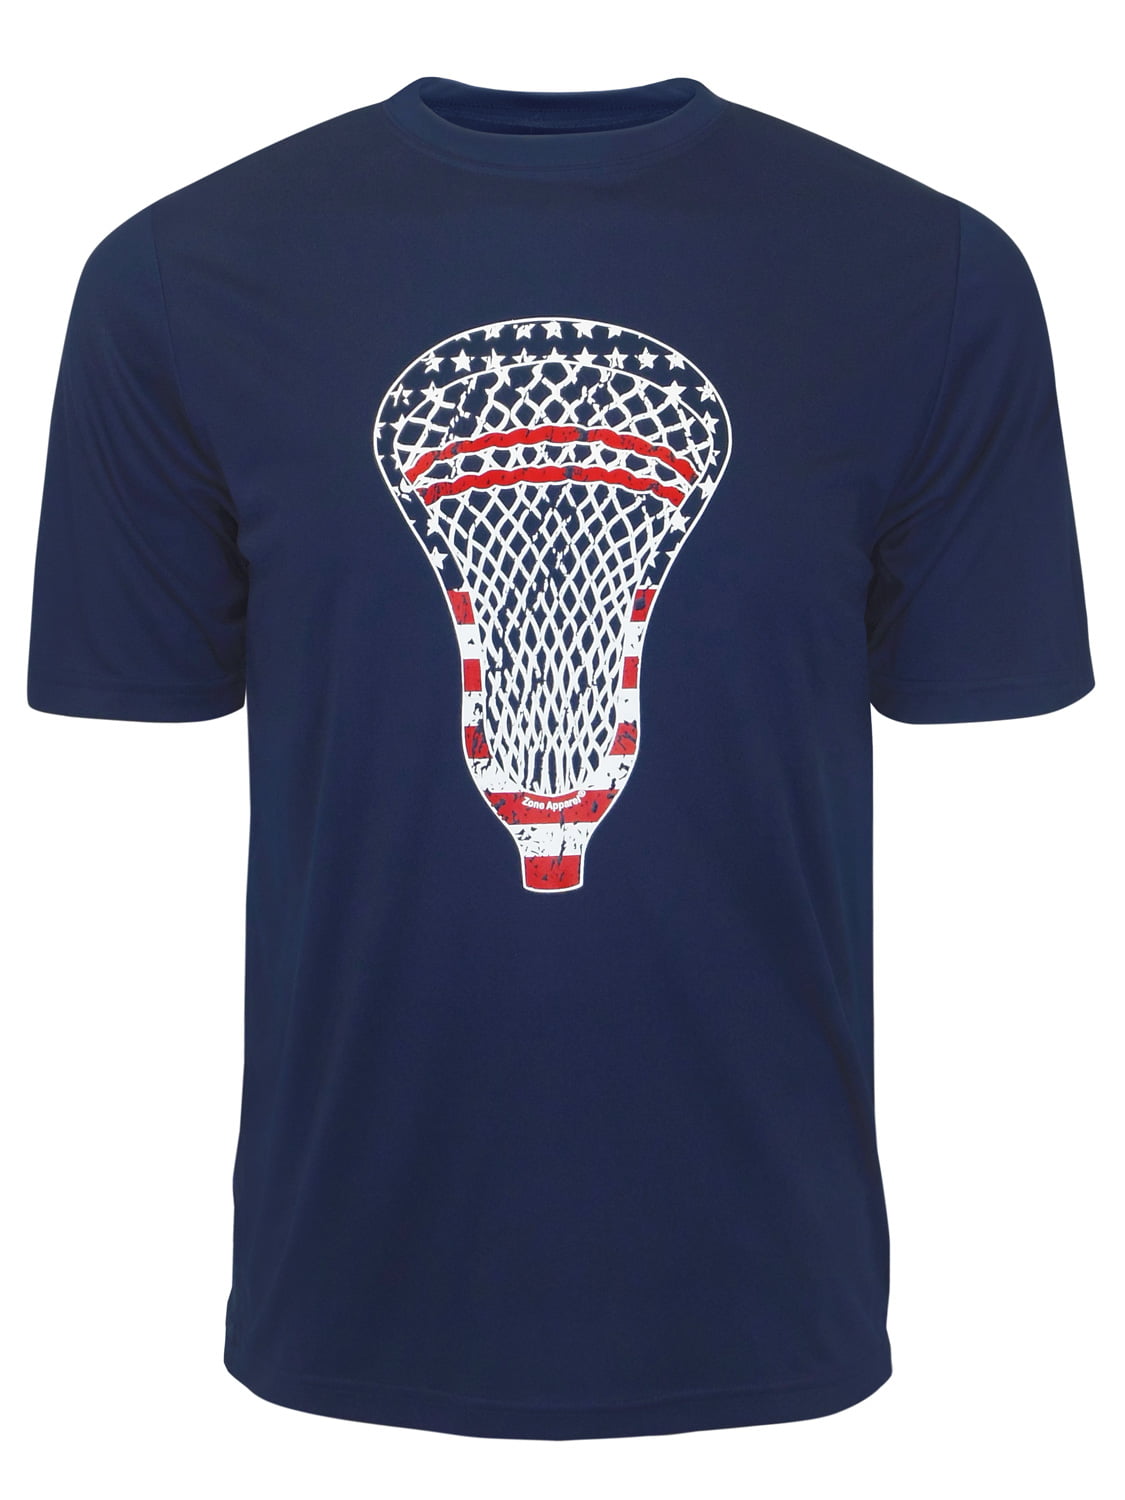 lacrosse clothing